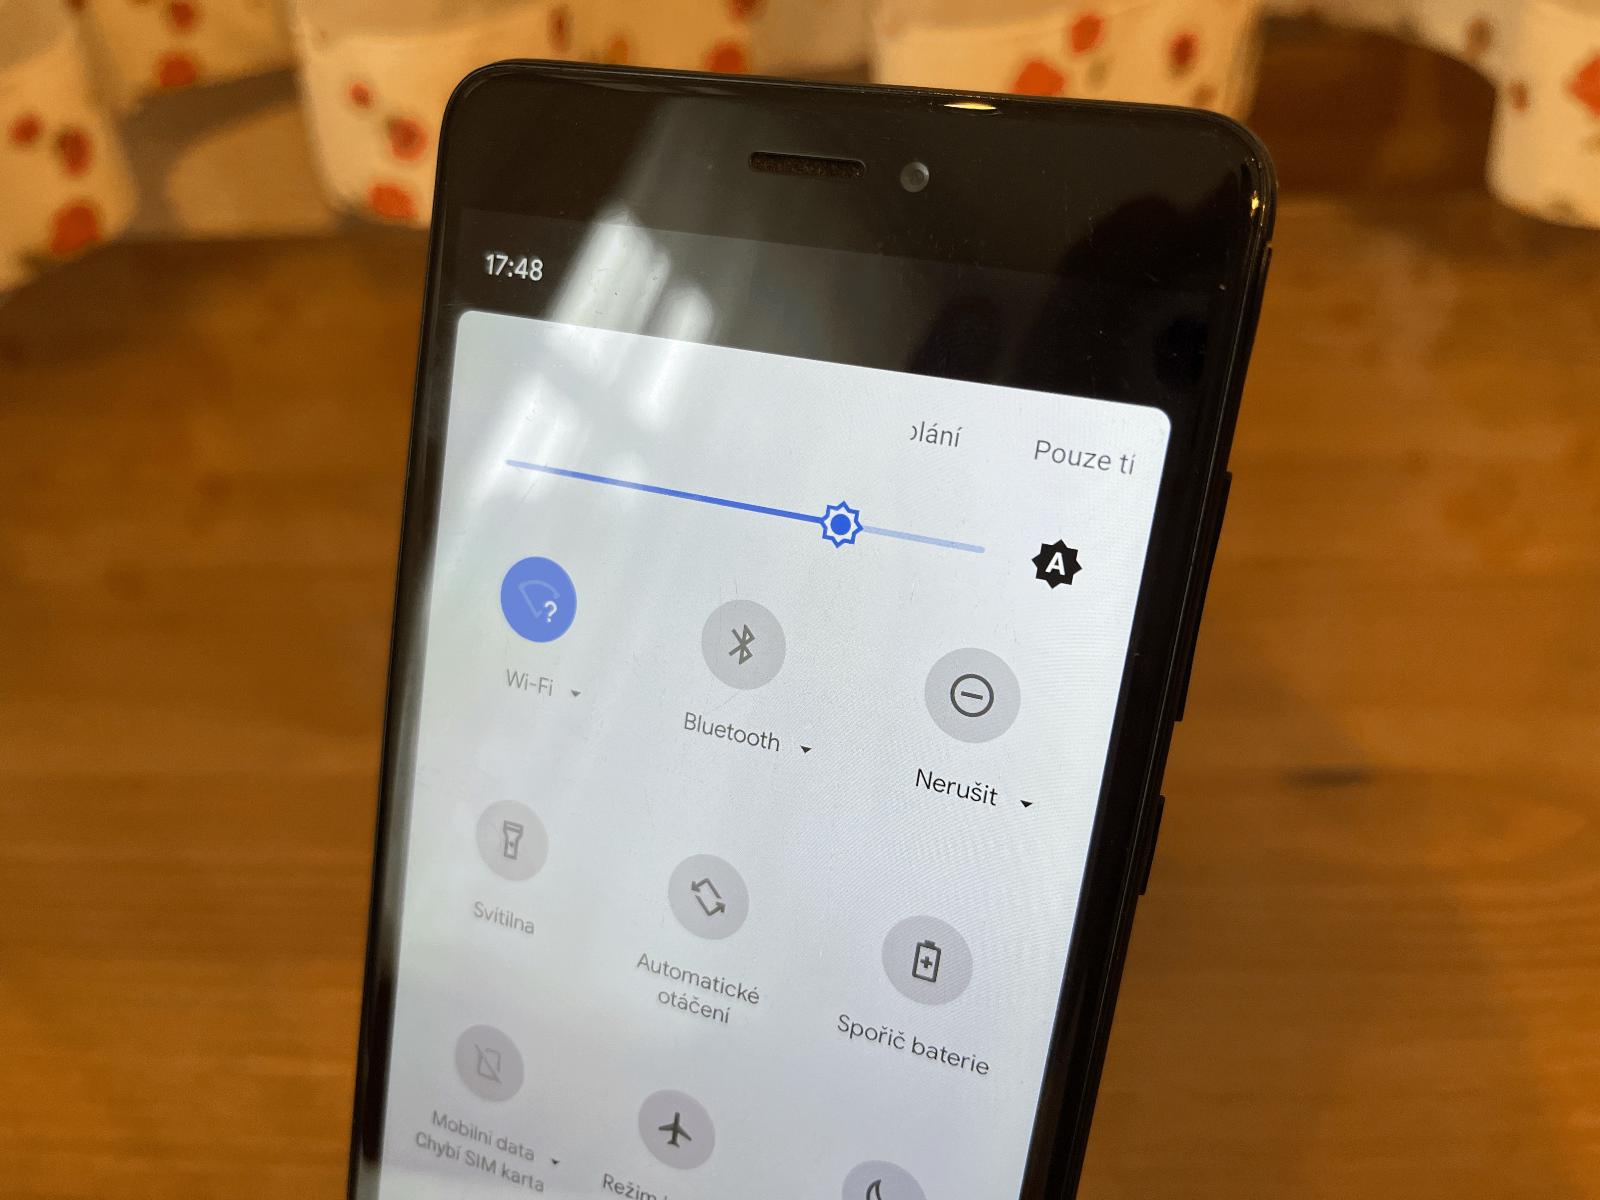 Xiaomi Redmi Note 4, Pozor čtěte! - Mobily a chytrá elektronika